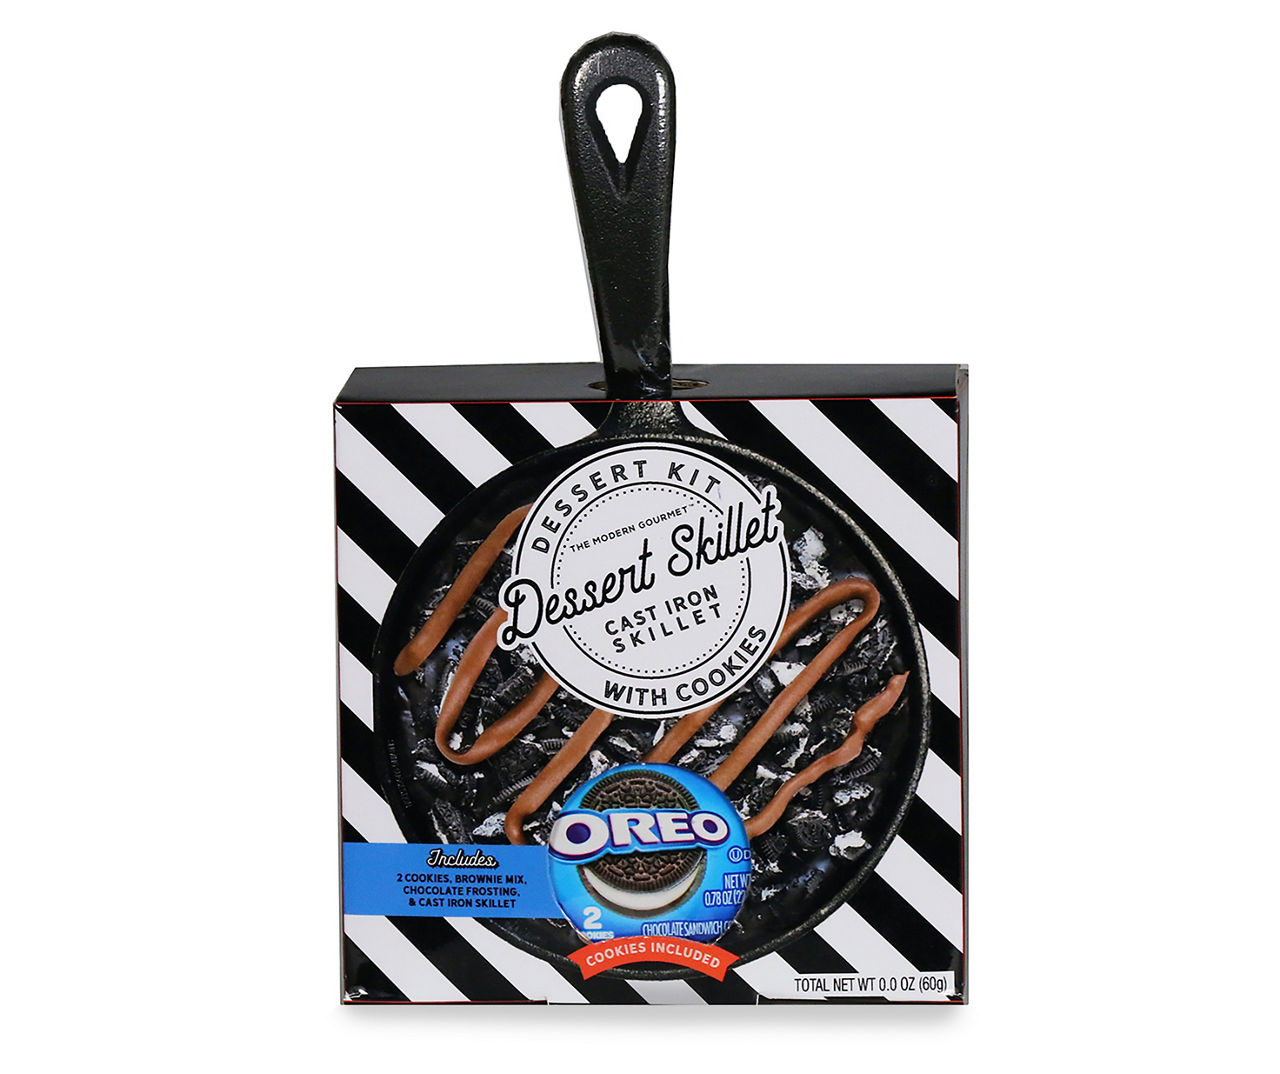 Oreo Cast Iron Skillet With Cookies Dessert Kit, 3.9 Oz.